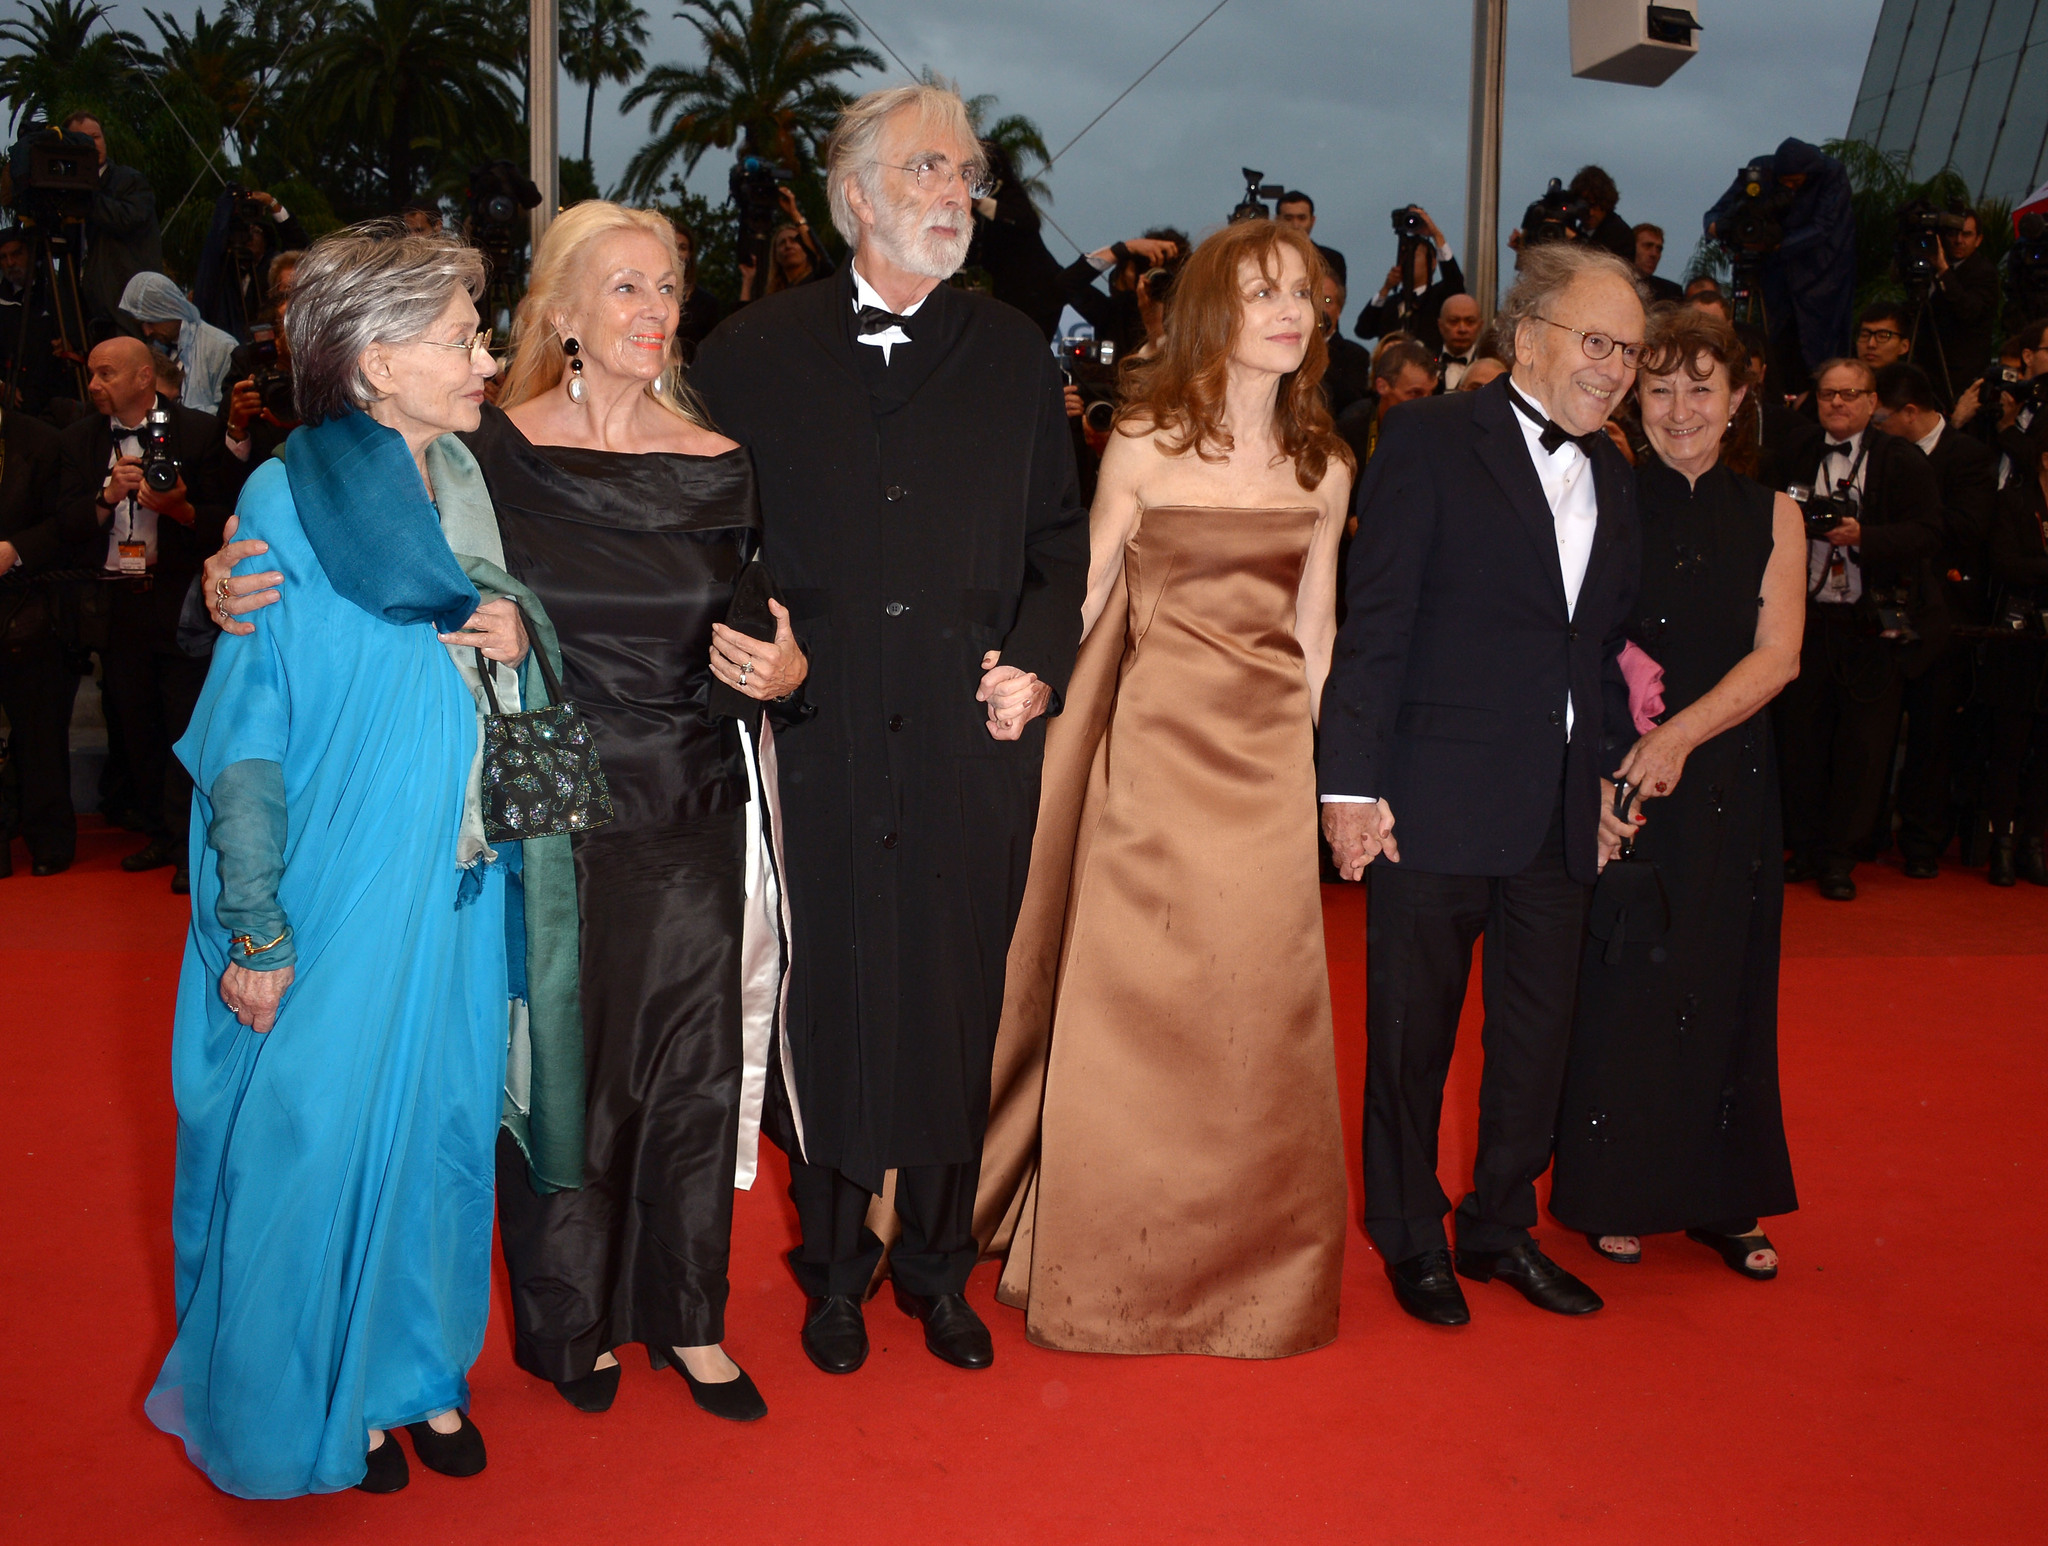 Isabelle Huppert, Jean-Louis Trintignant, Michael Haneke, Emmanuelle Riva and Susanne Haneke at event of Amour (2012)